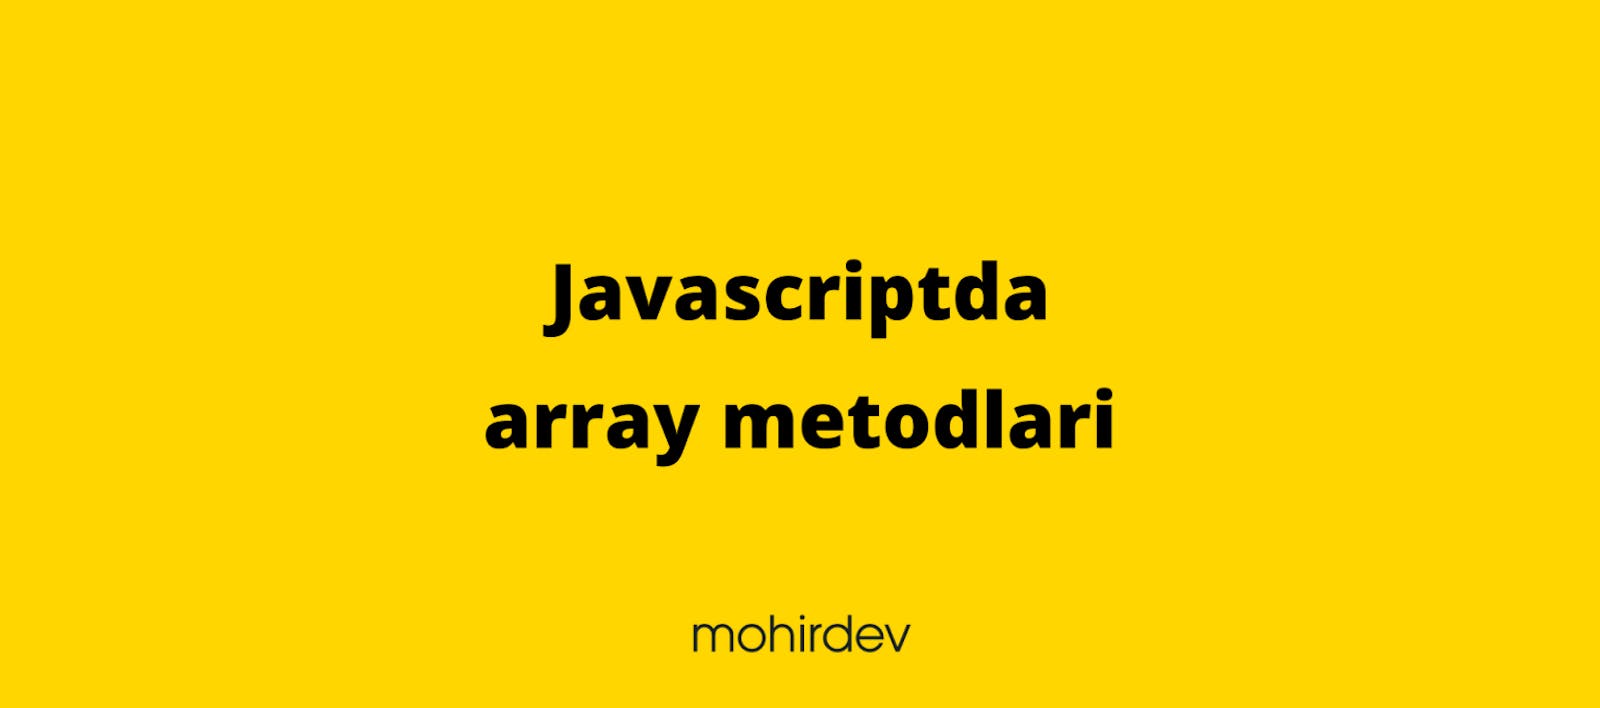 JavaScriptda Array metodlari